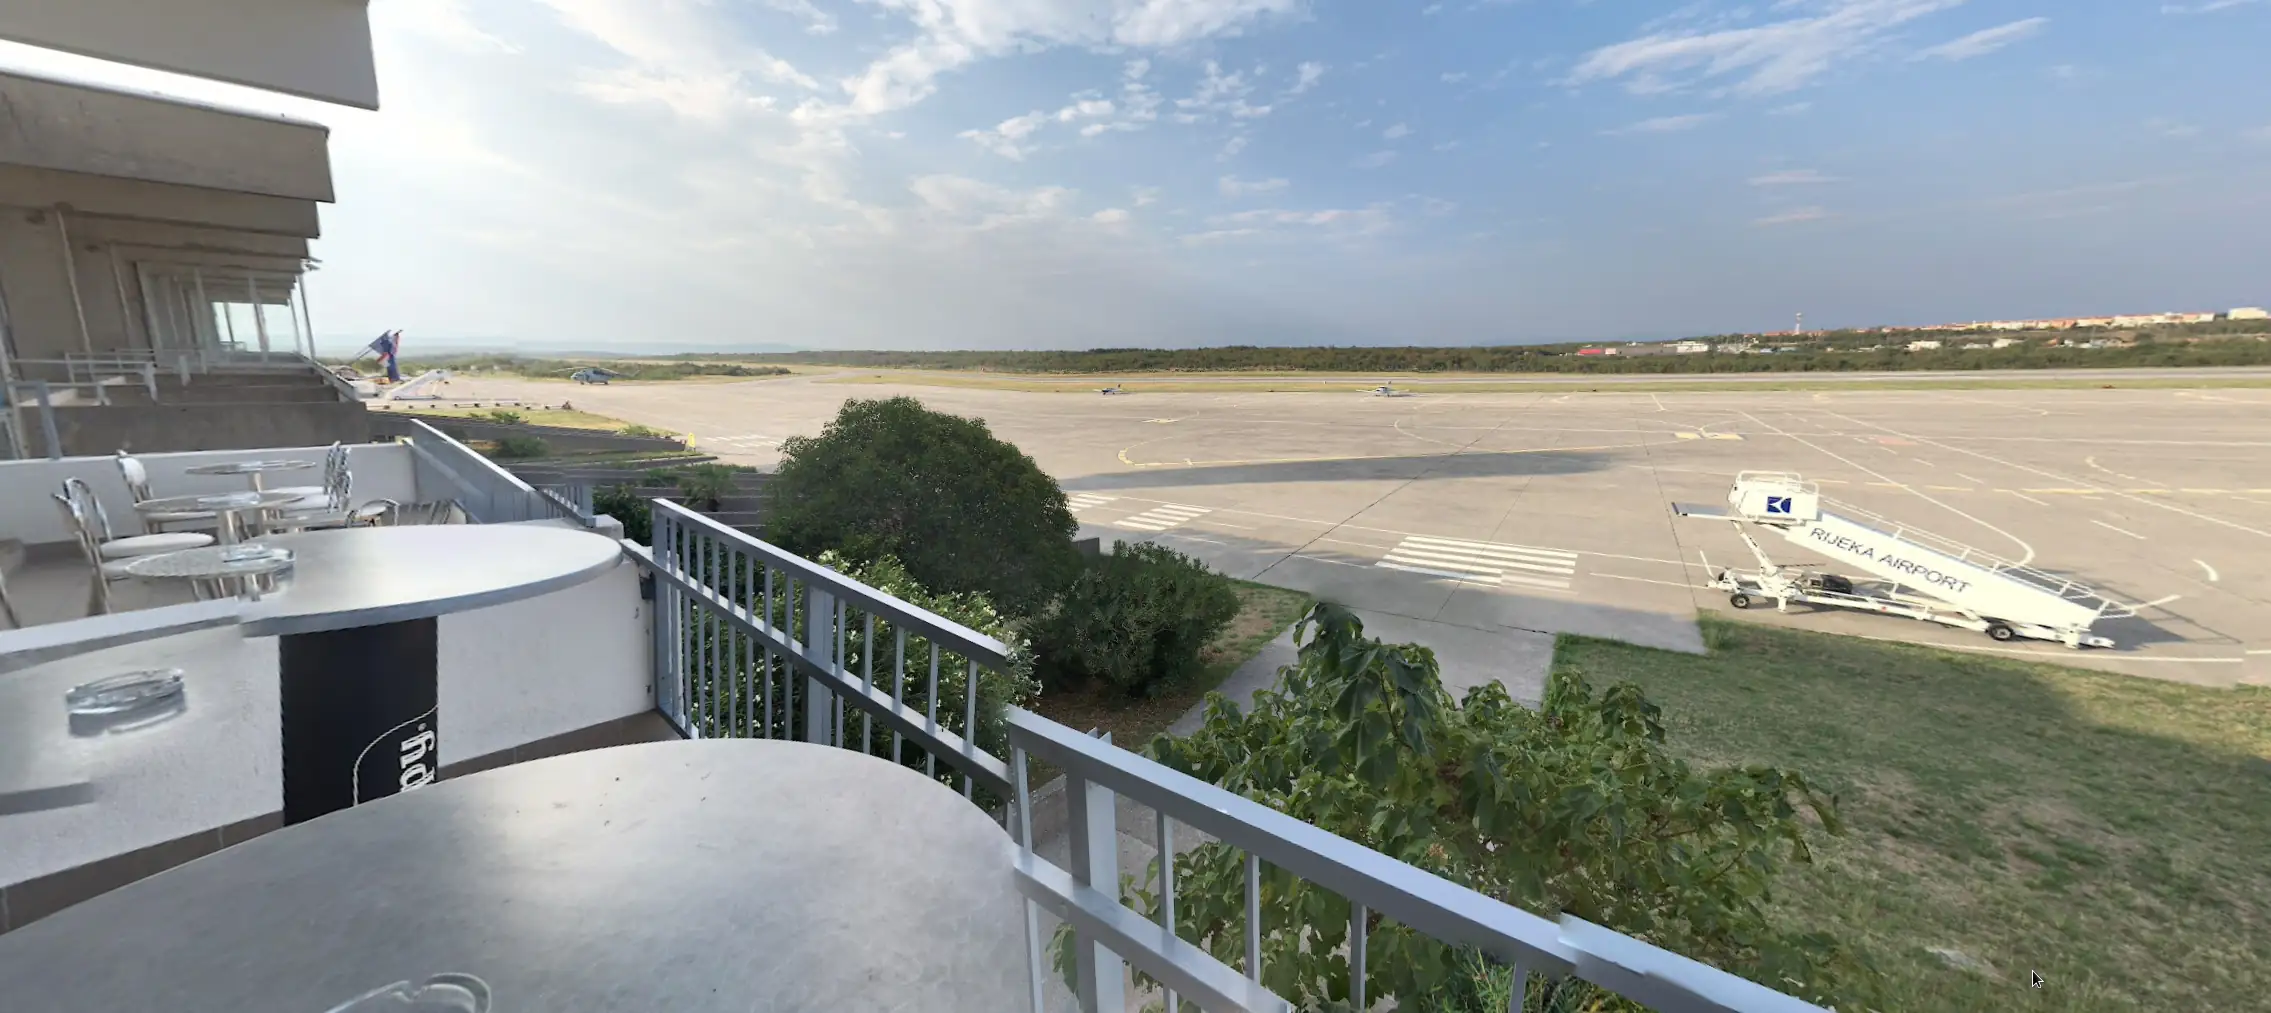 Rijeka airport. This is the Everon main airport.